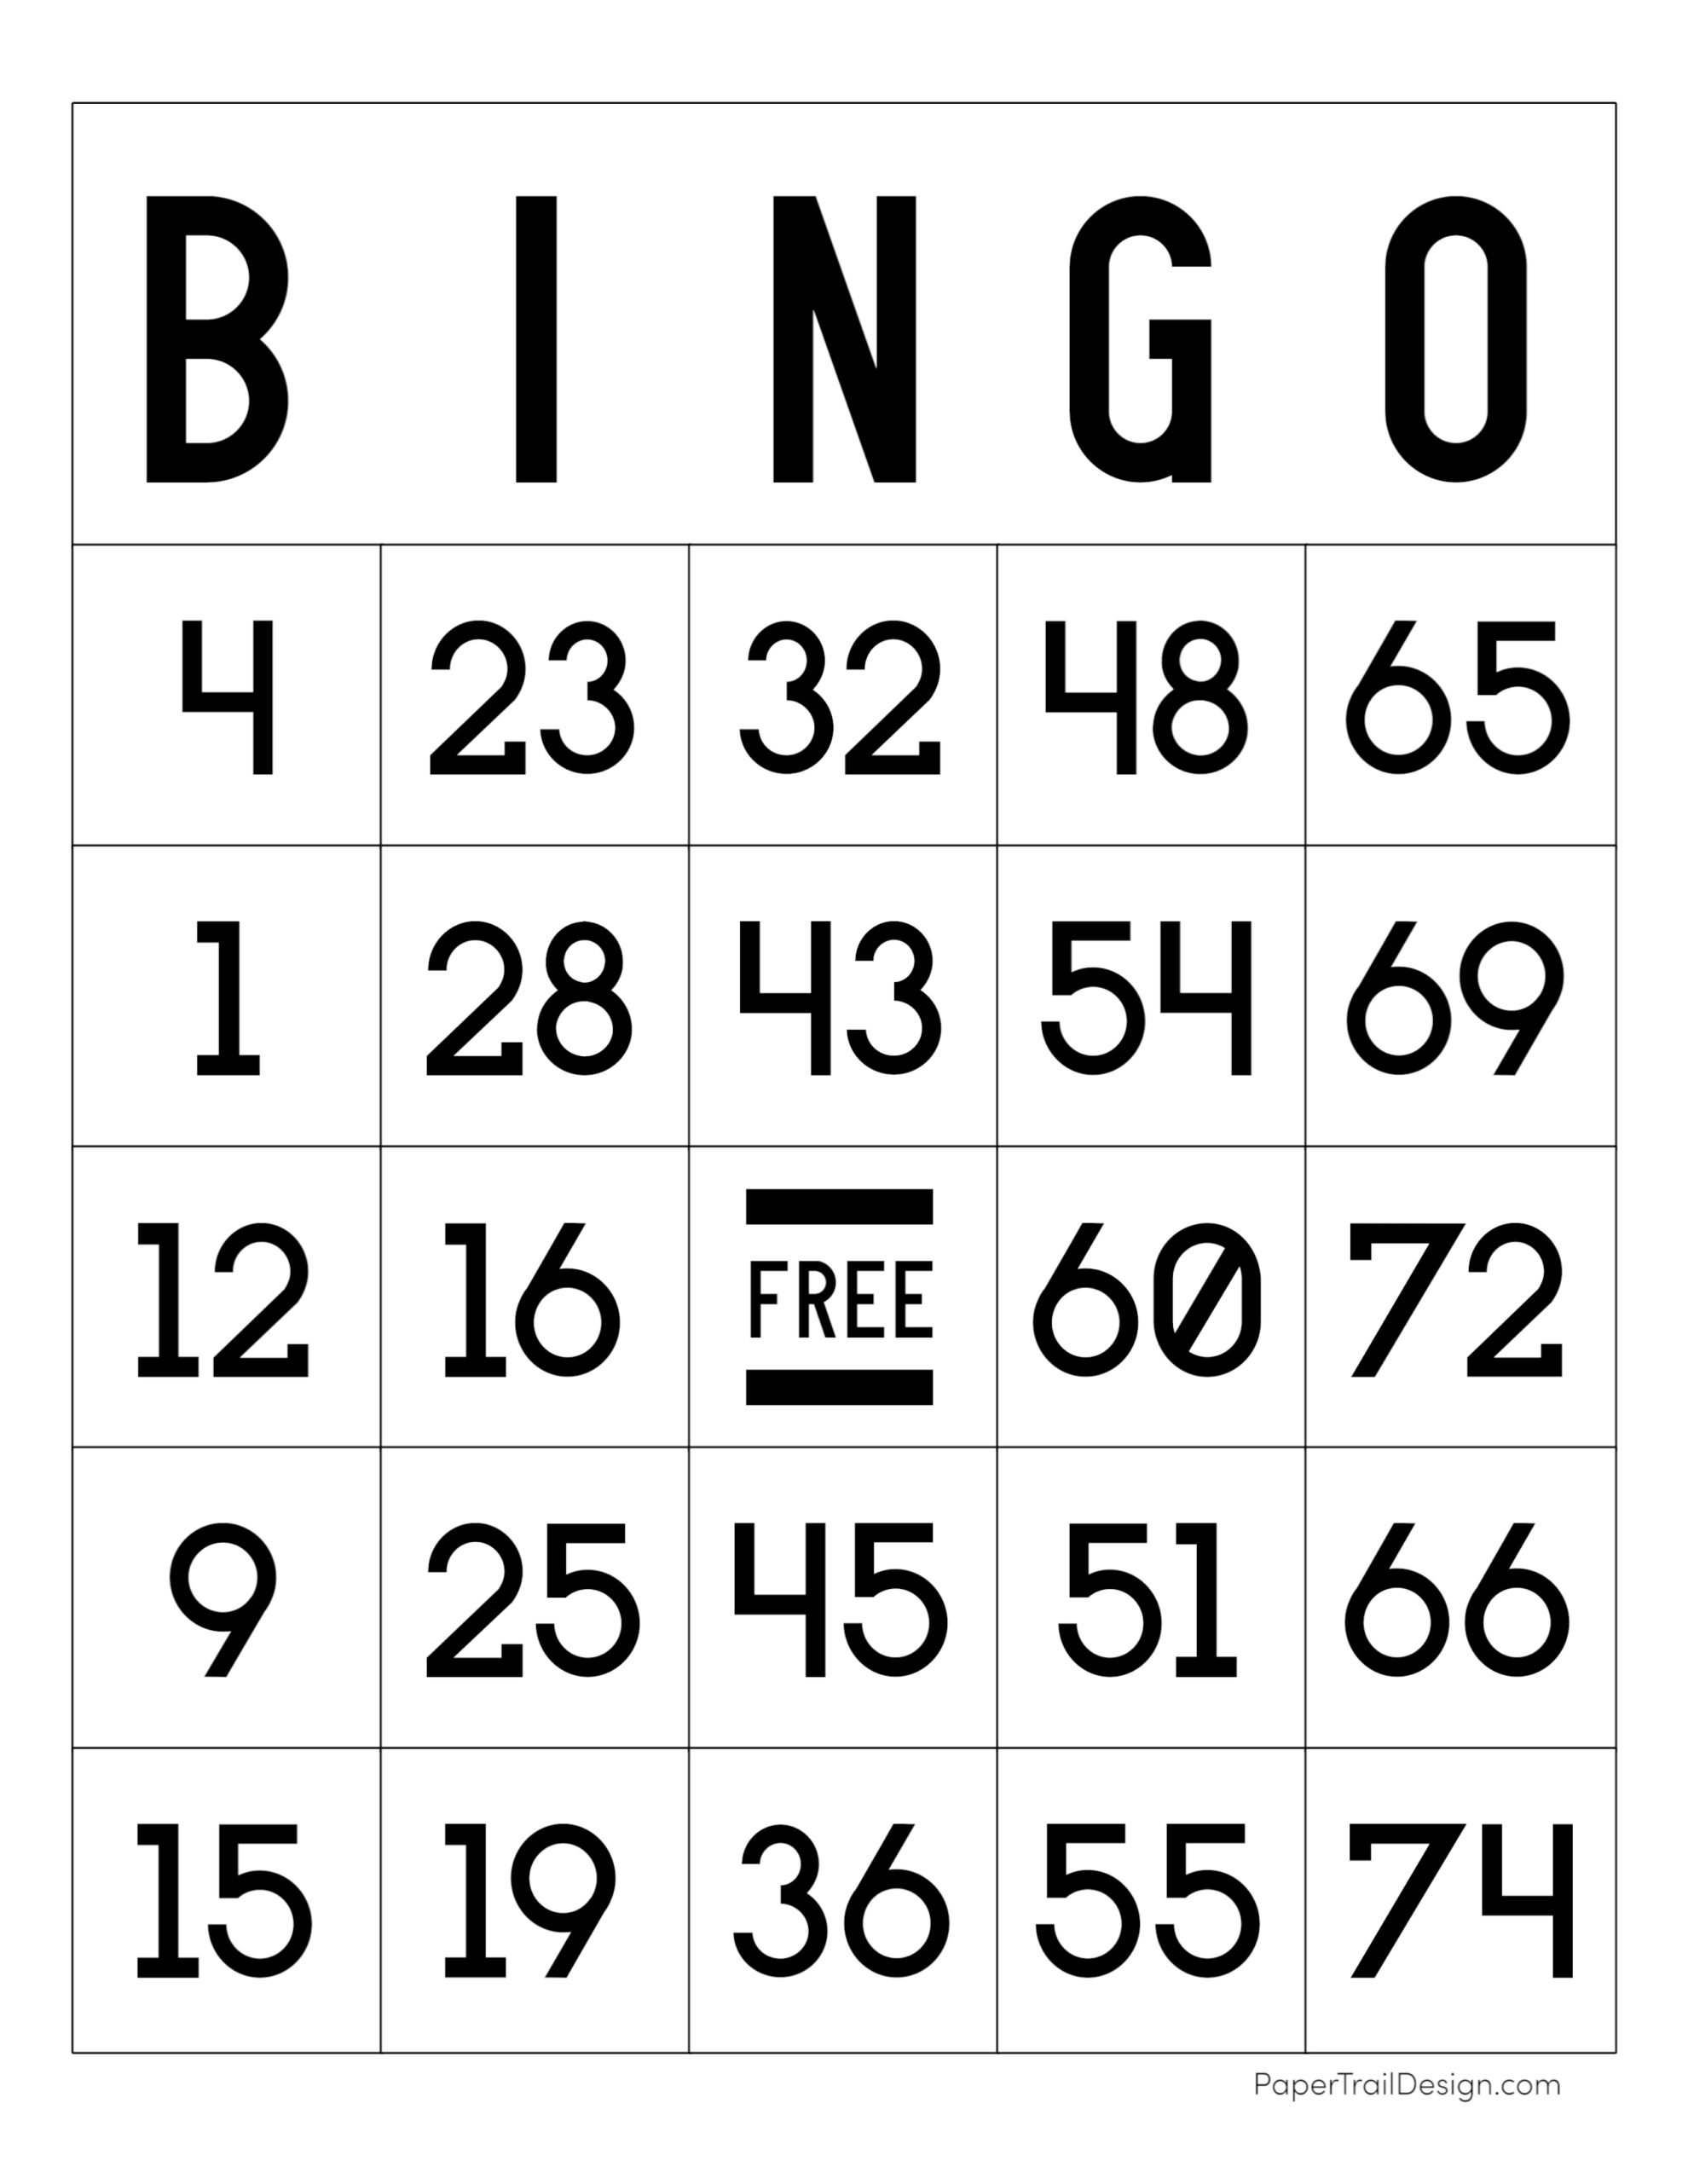 free-printable-number-bingo-cards-1-20